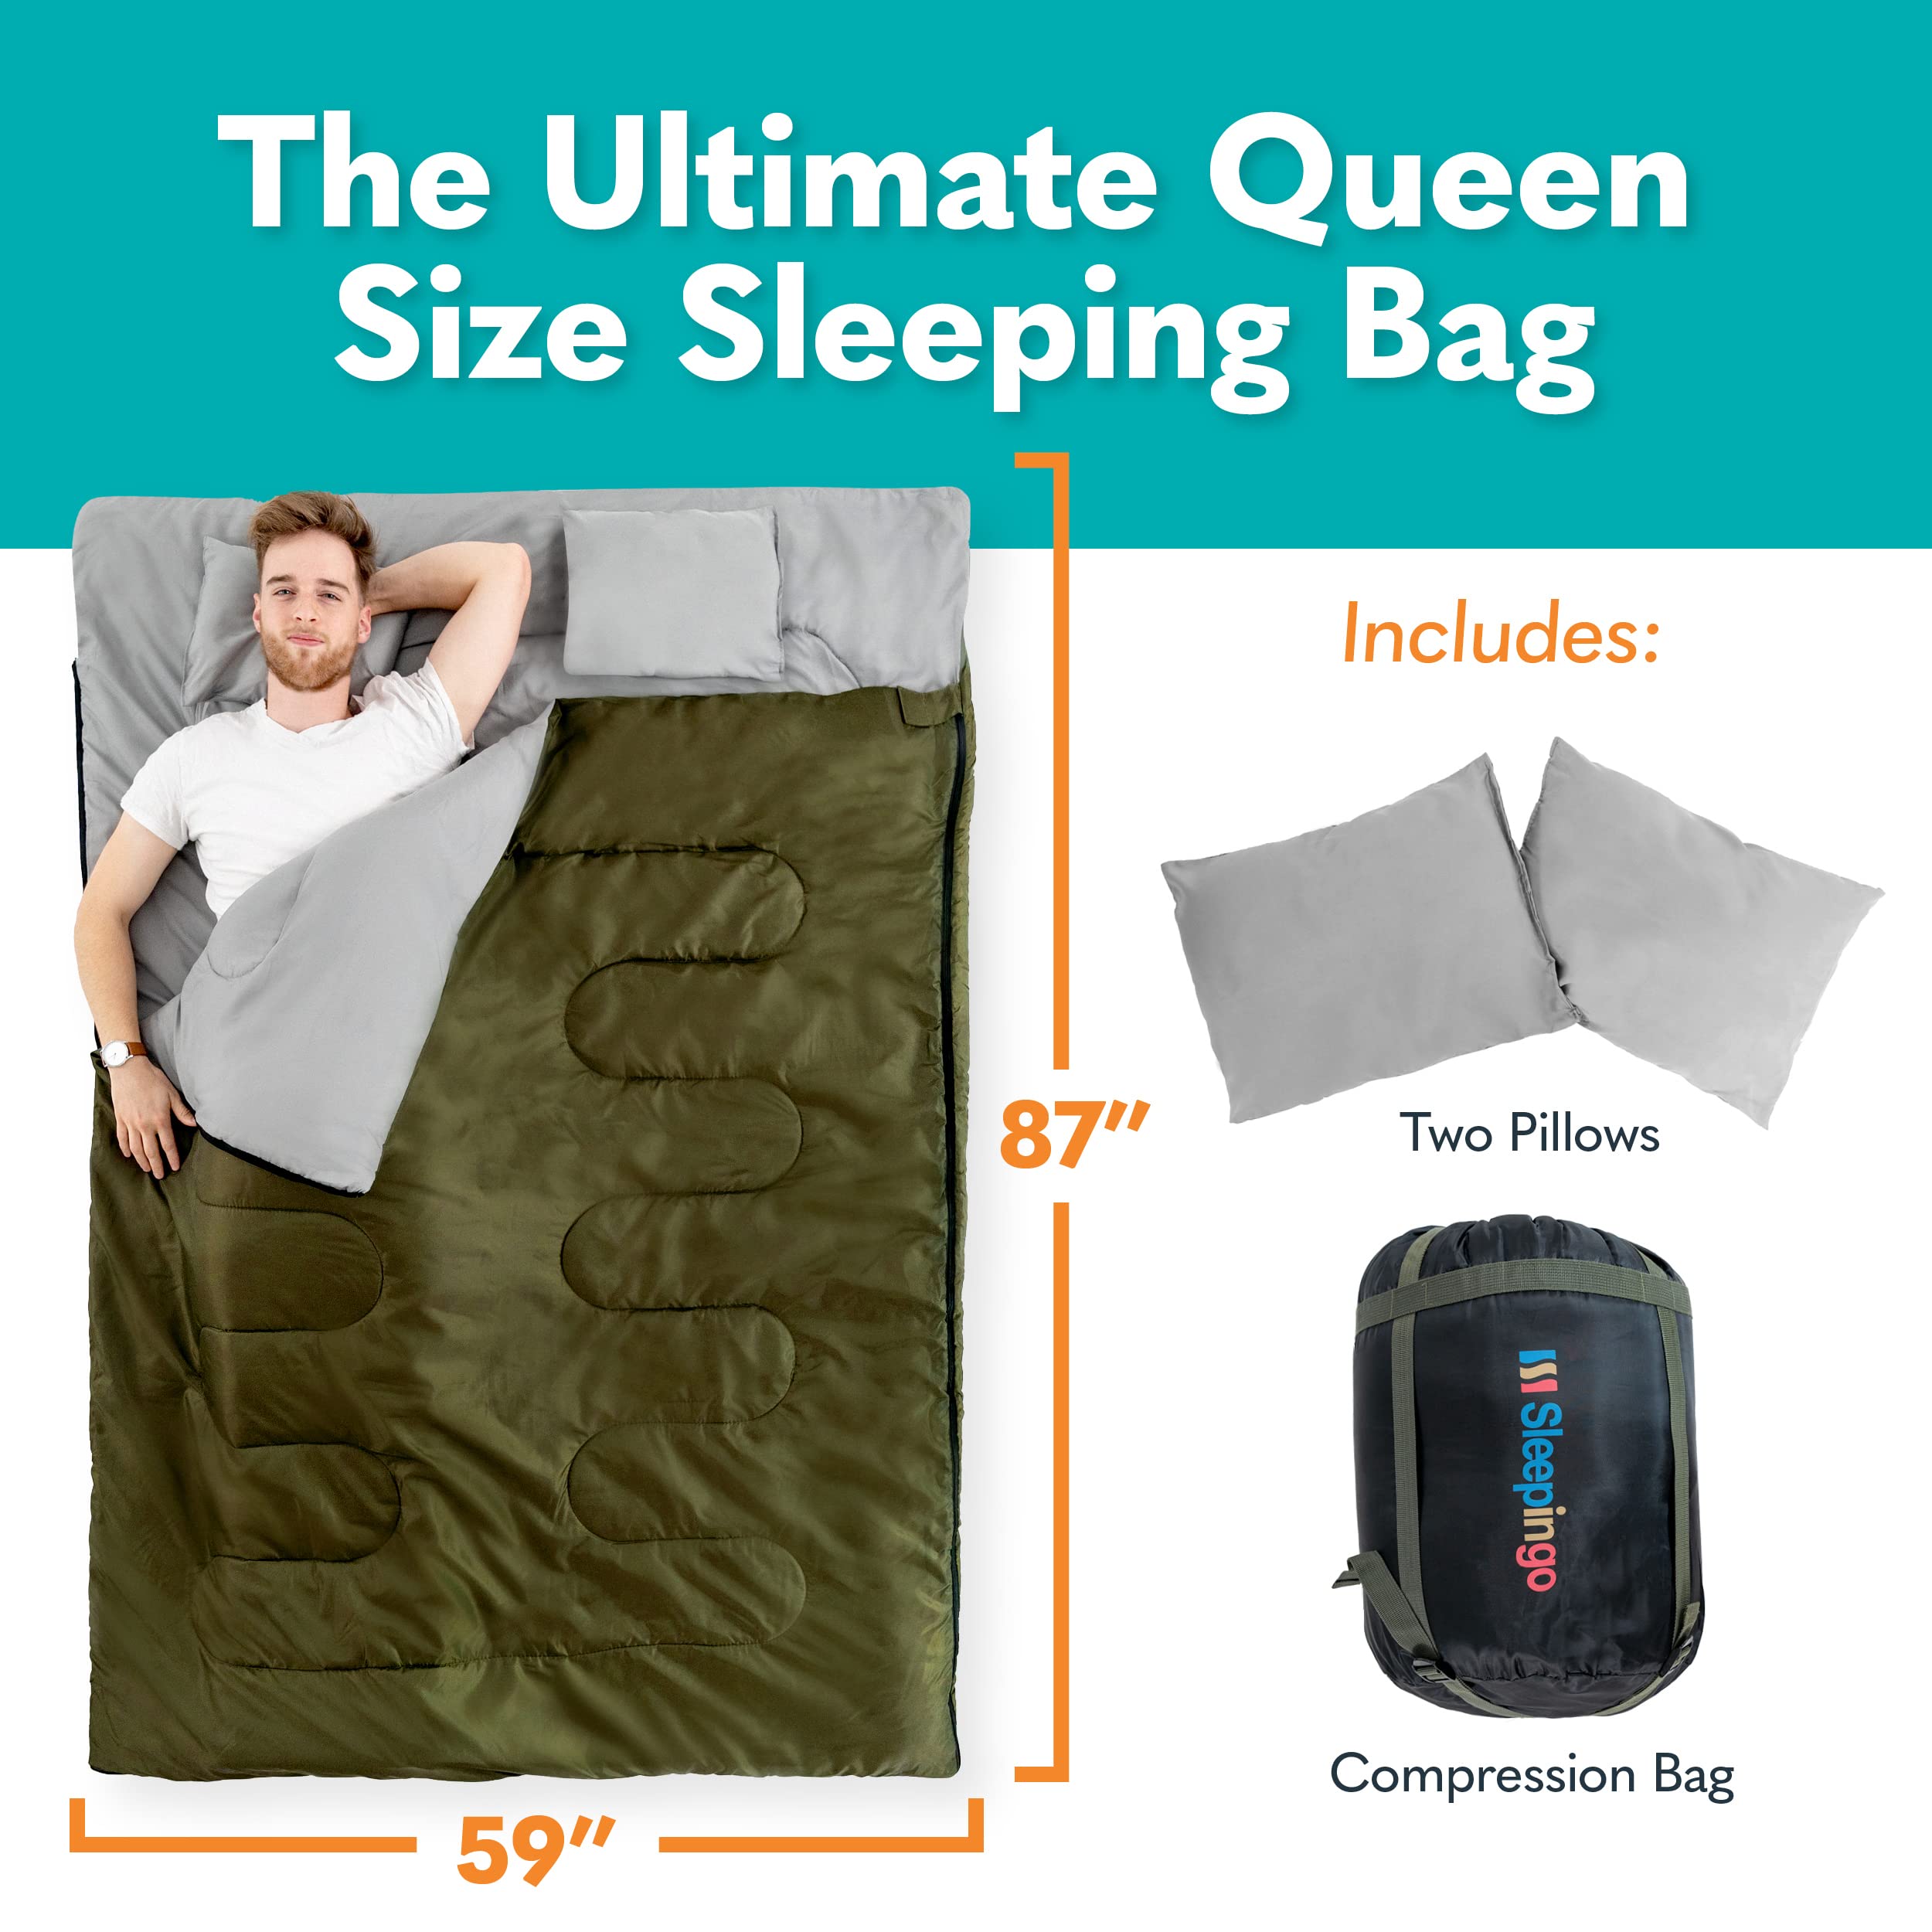 Sleepingo Double Sleeping Bags for Adults Backpacking, Camping, Hiking - Waterproof Queen Sleeping Bag for Adults or Teens - Two Person Sleeping Bag  - Acceptable